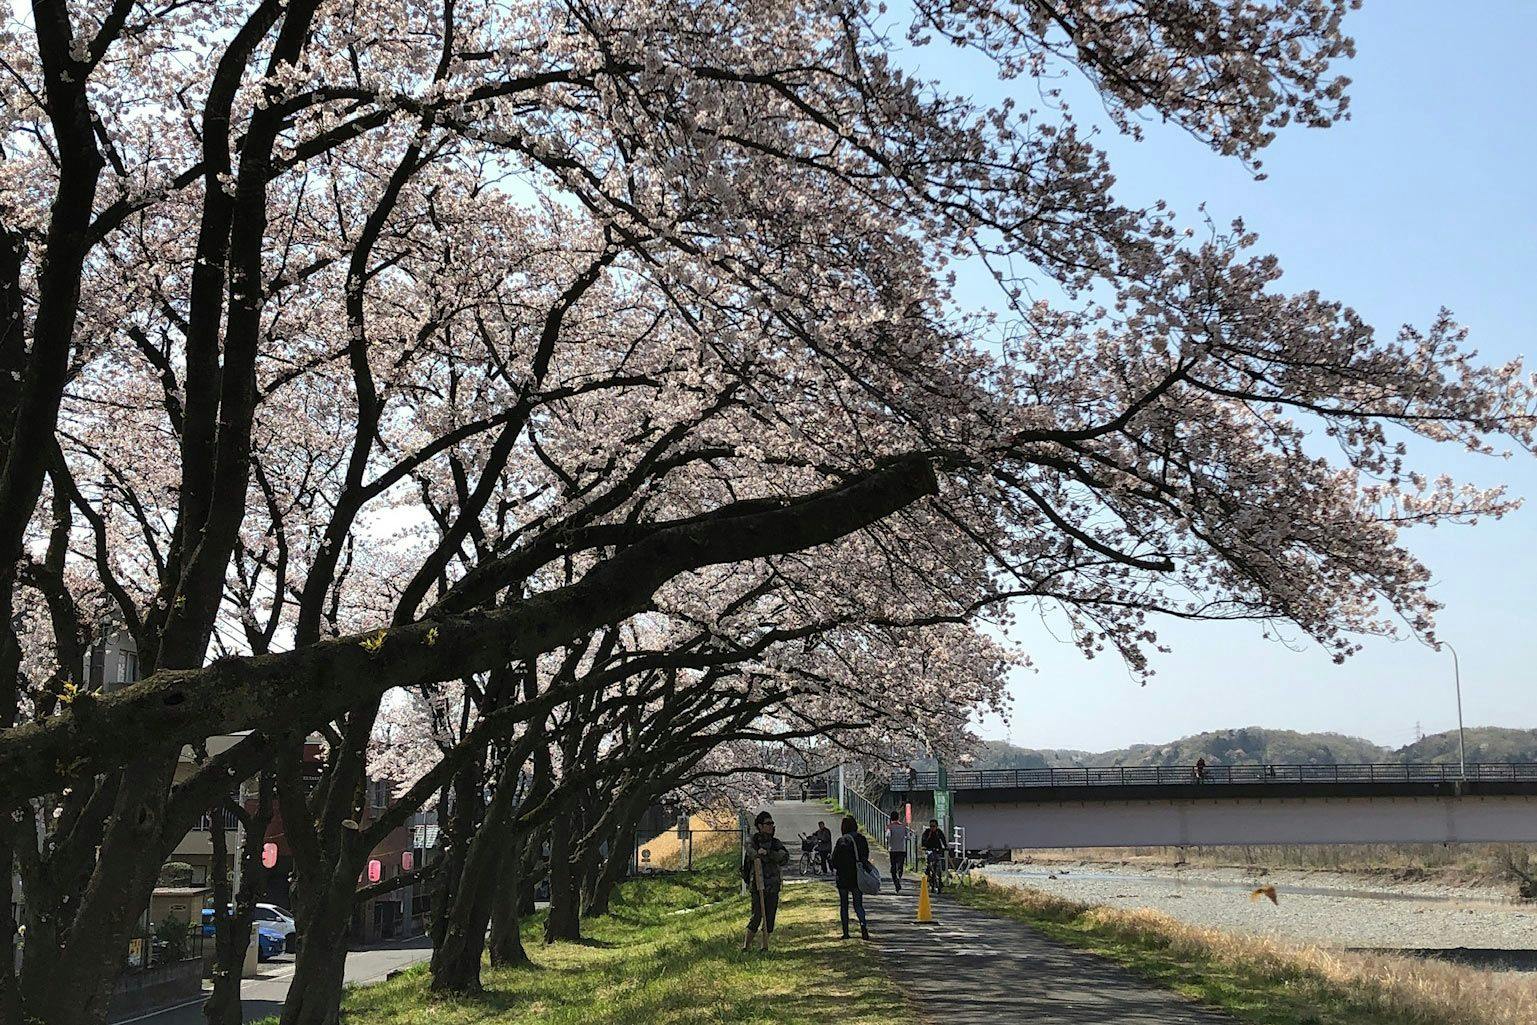 Cherry blossoms alongside the Tama River